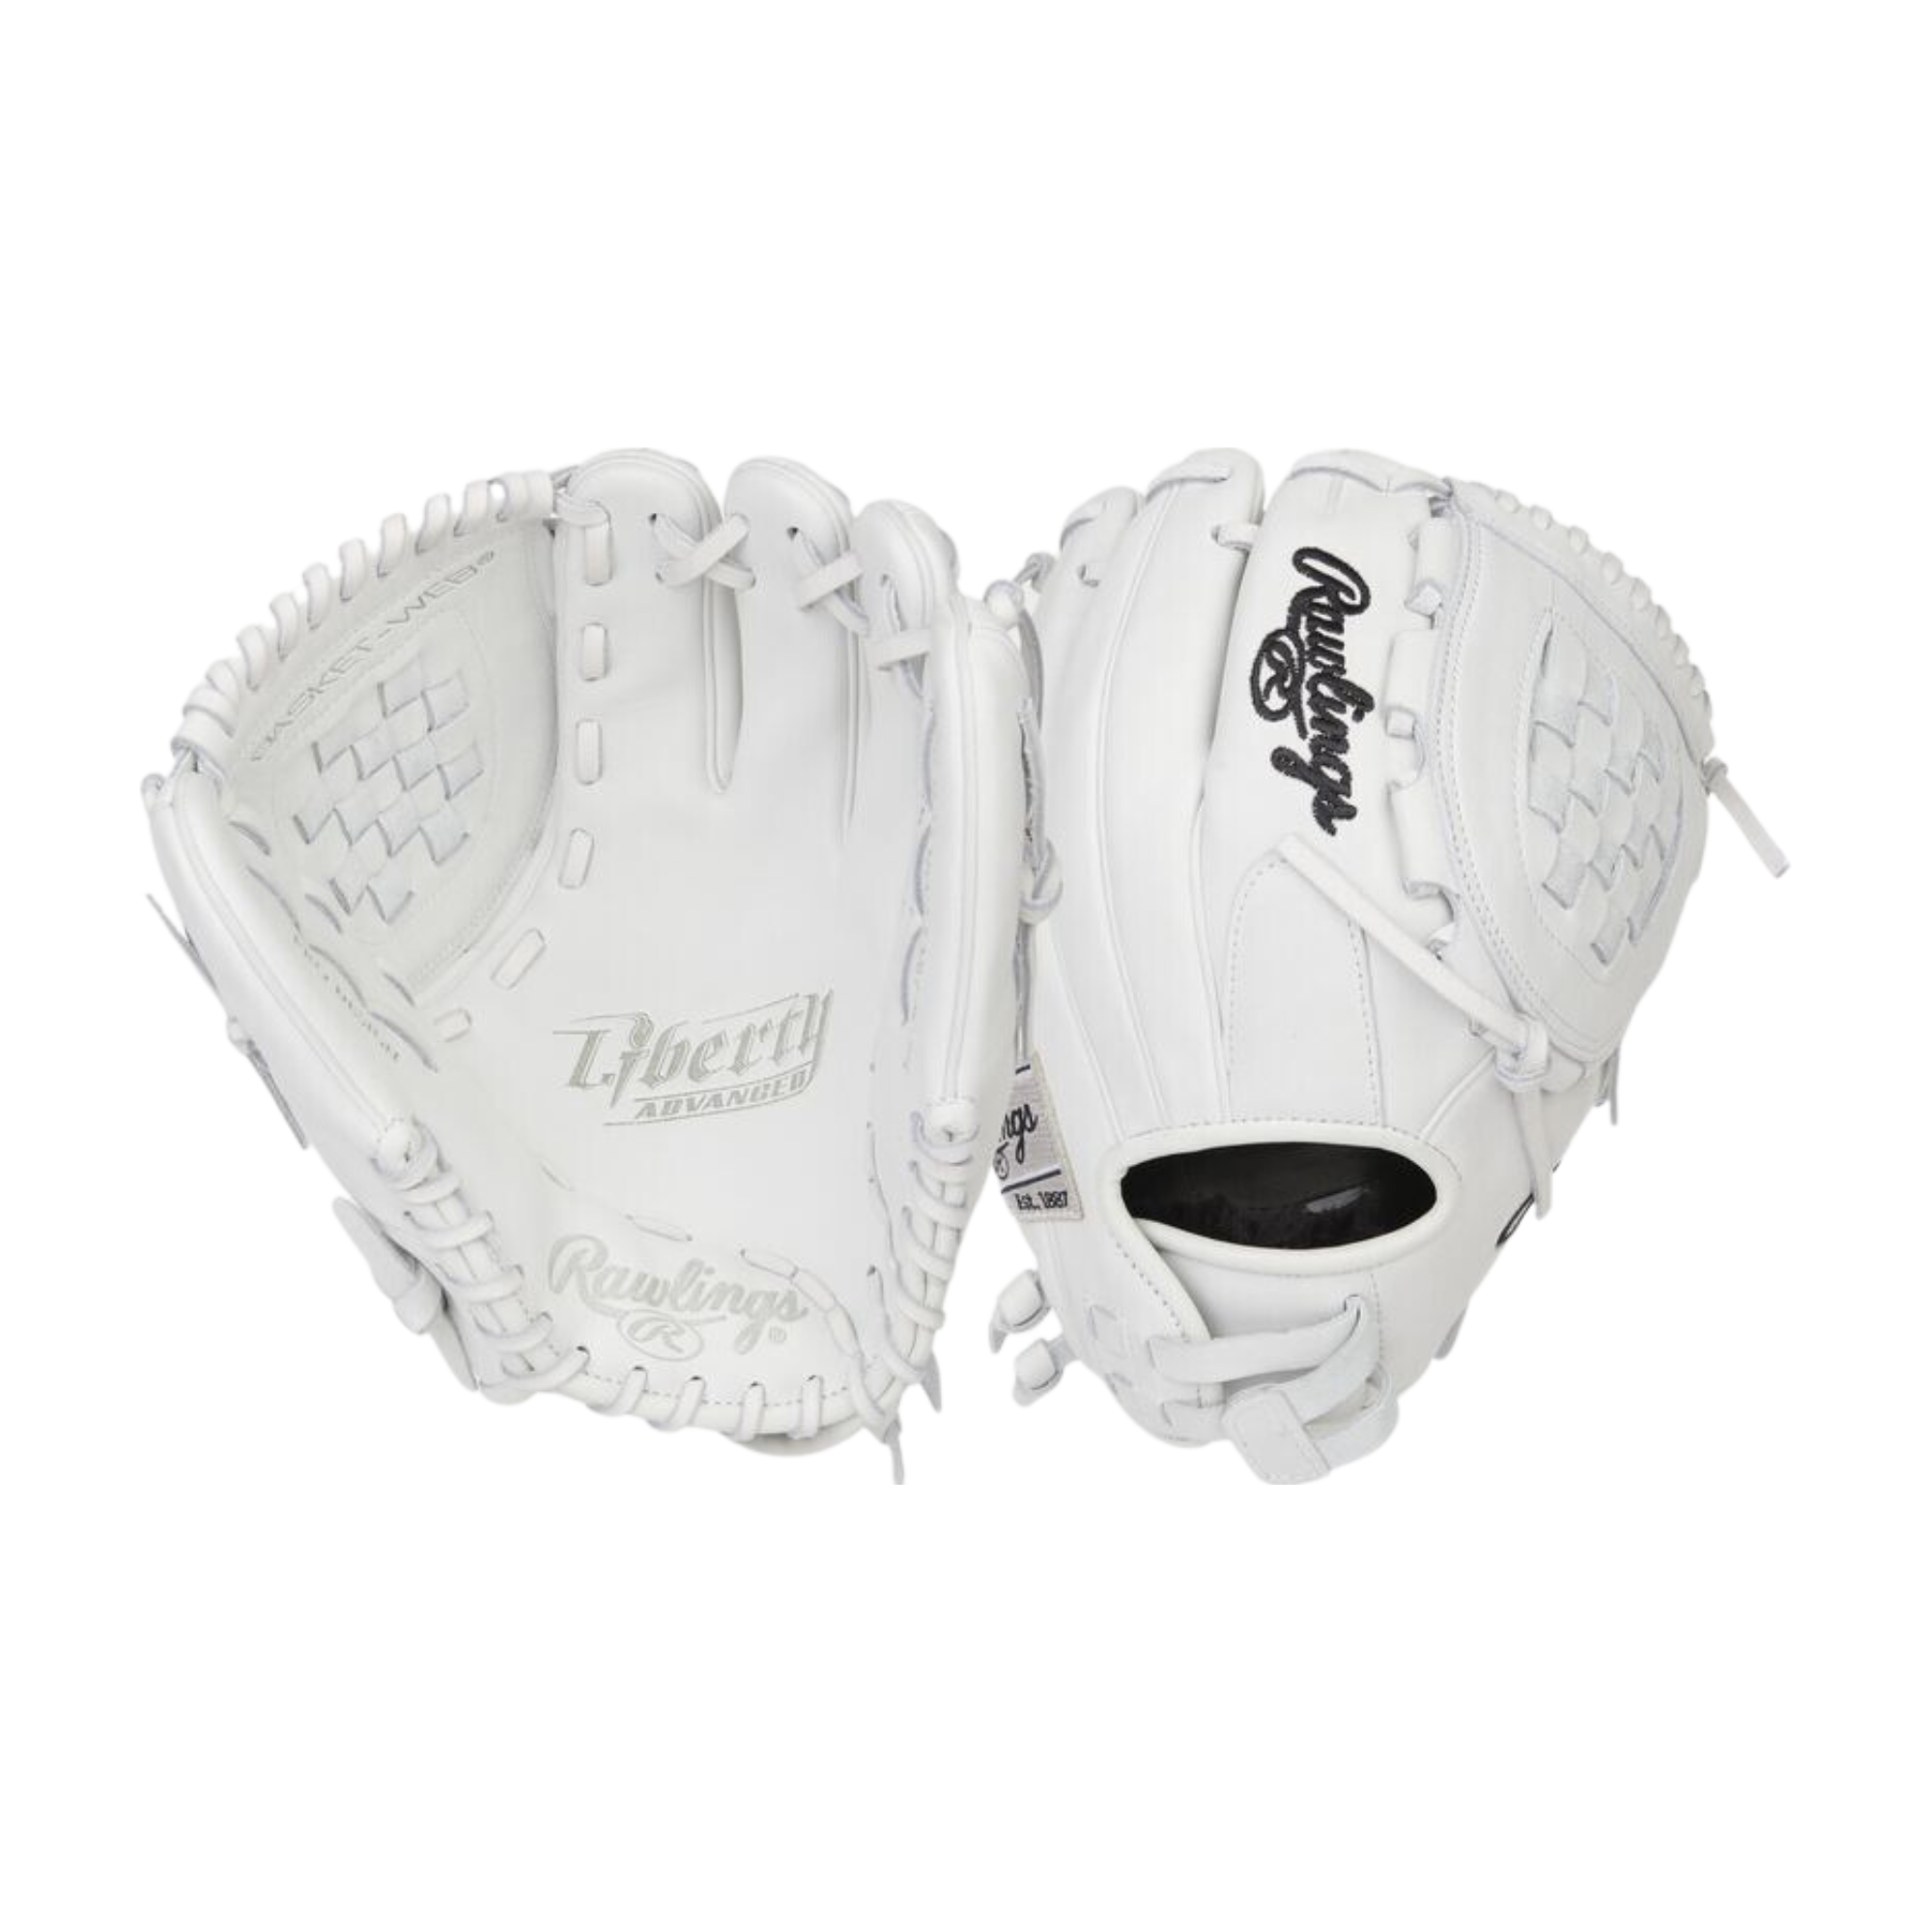 Rawlings Liberty Advanced 11.5-inch Softball Glove RHT